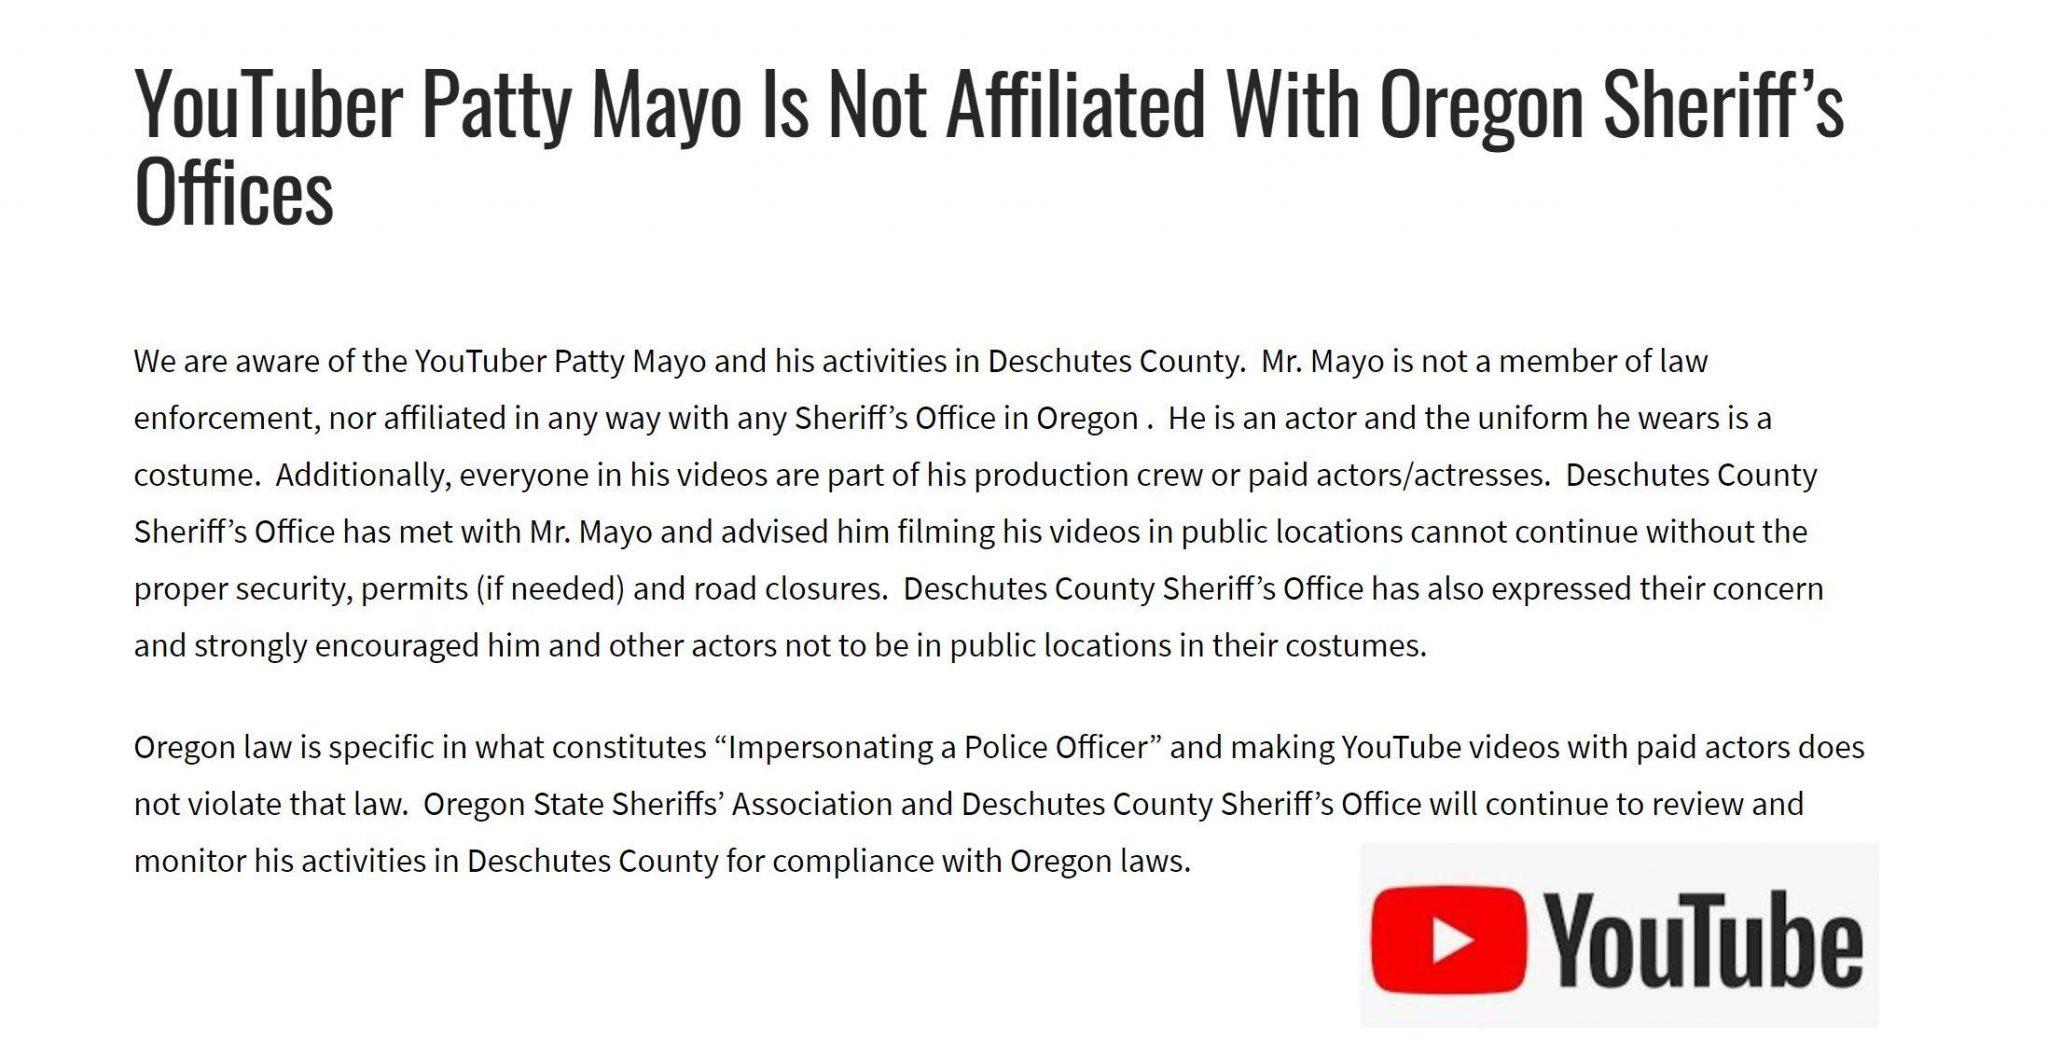 Oregon State Sheriff's Association